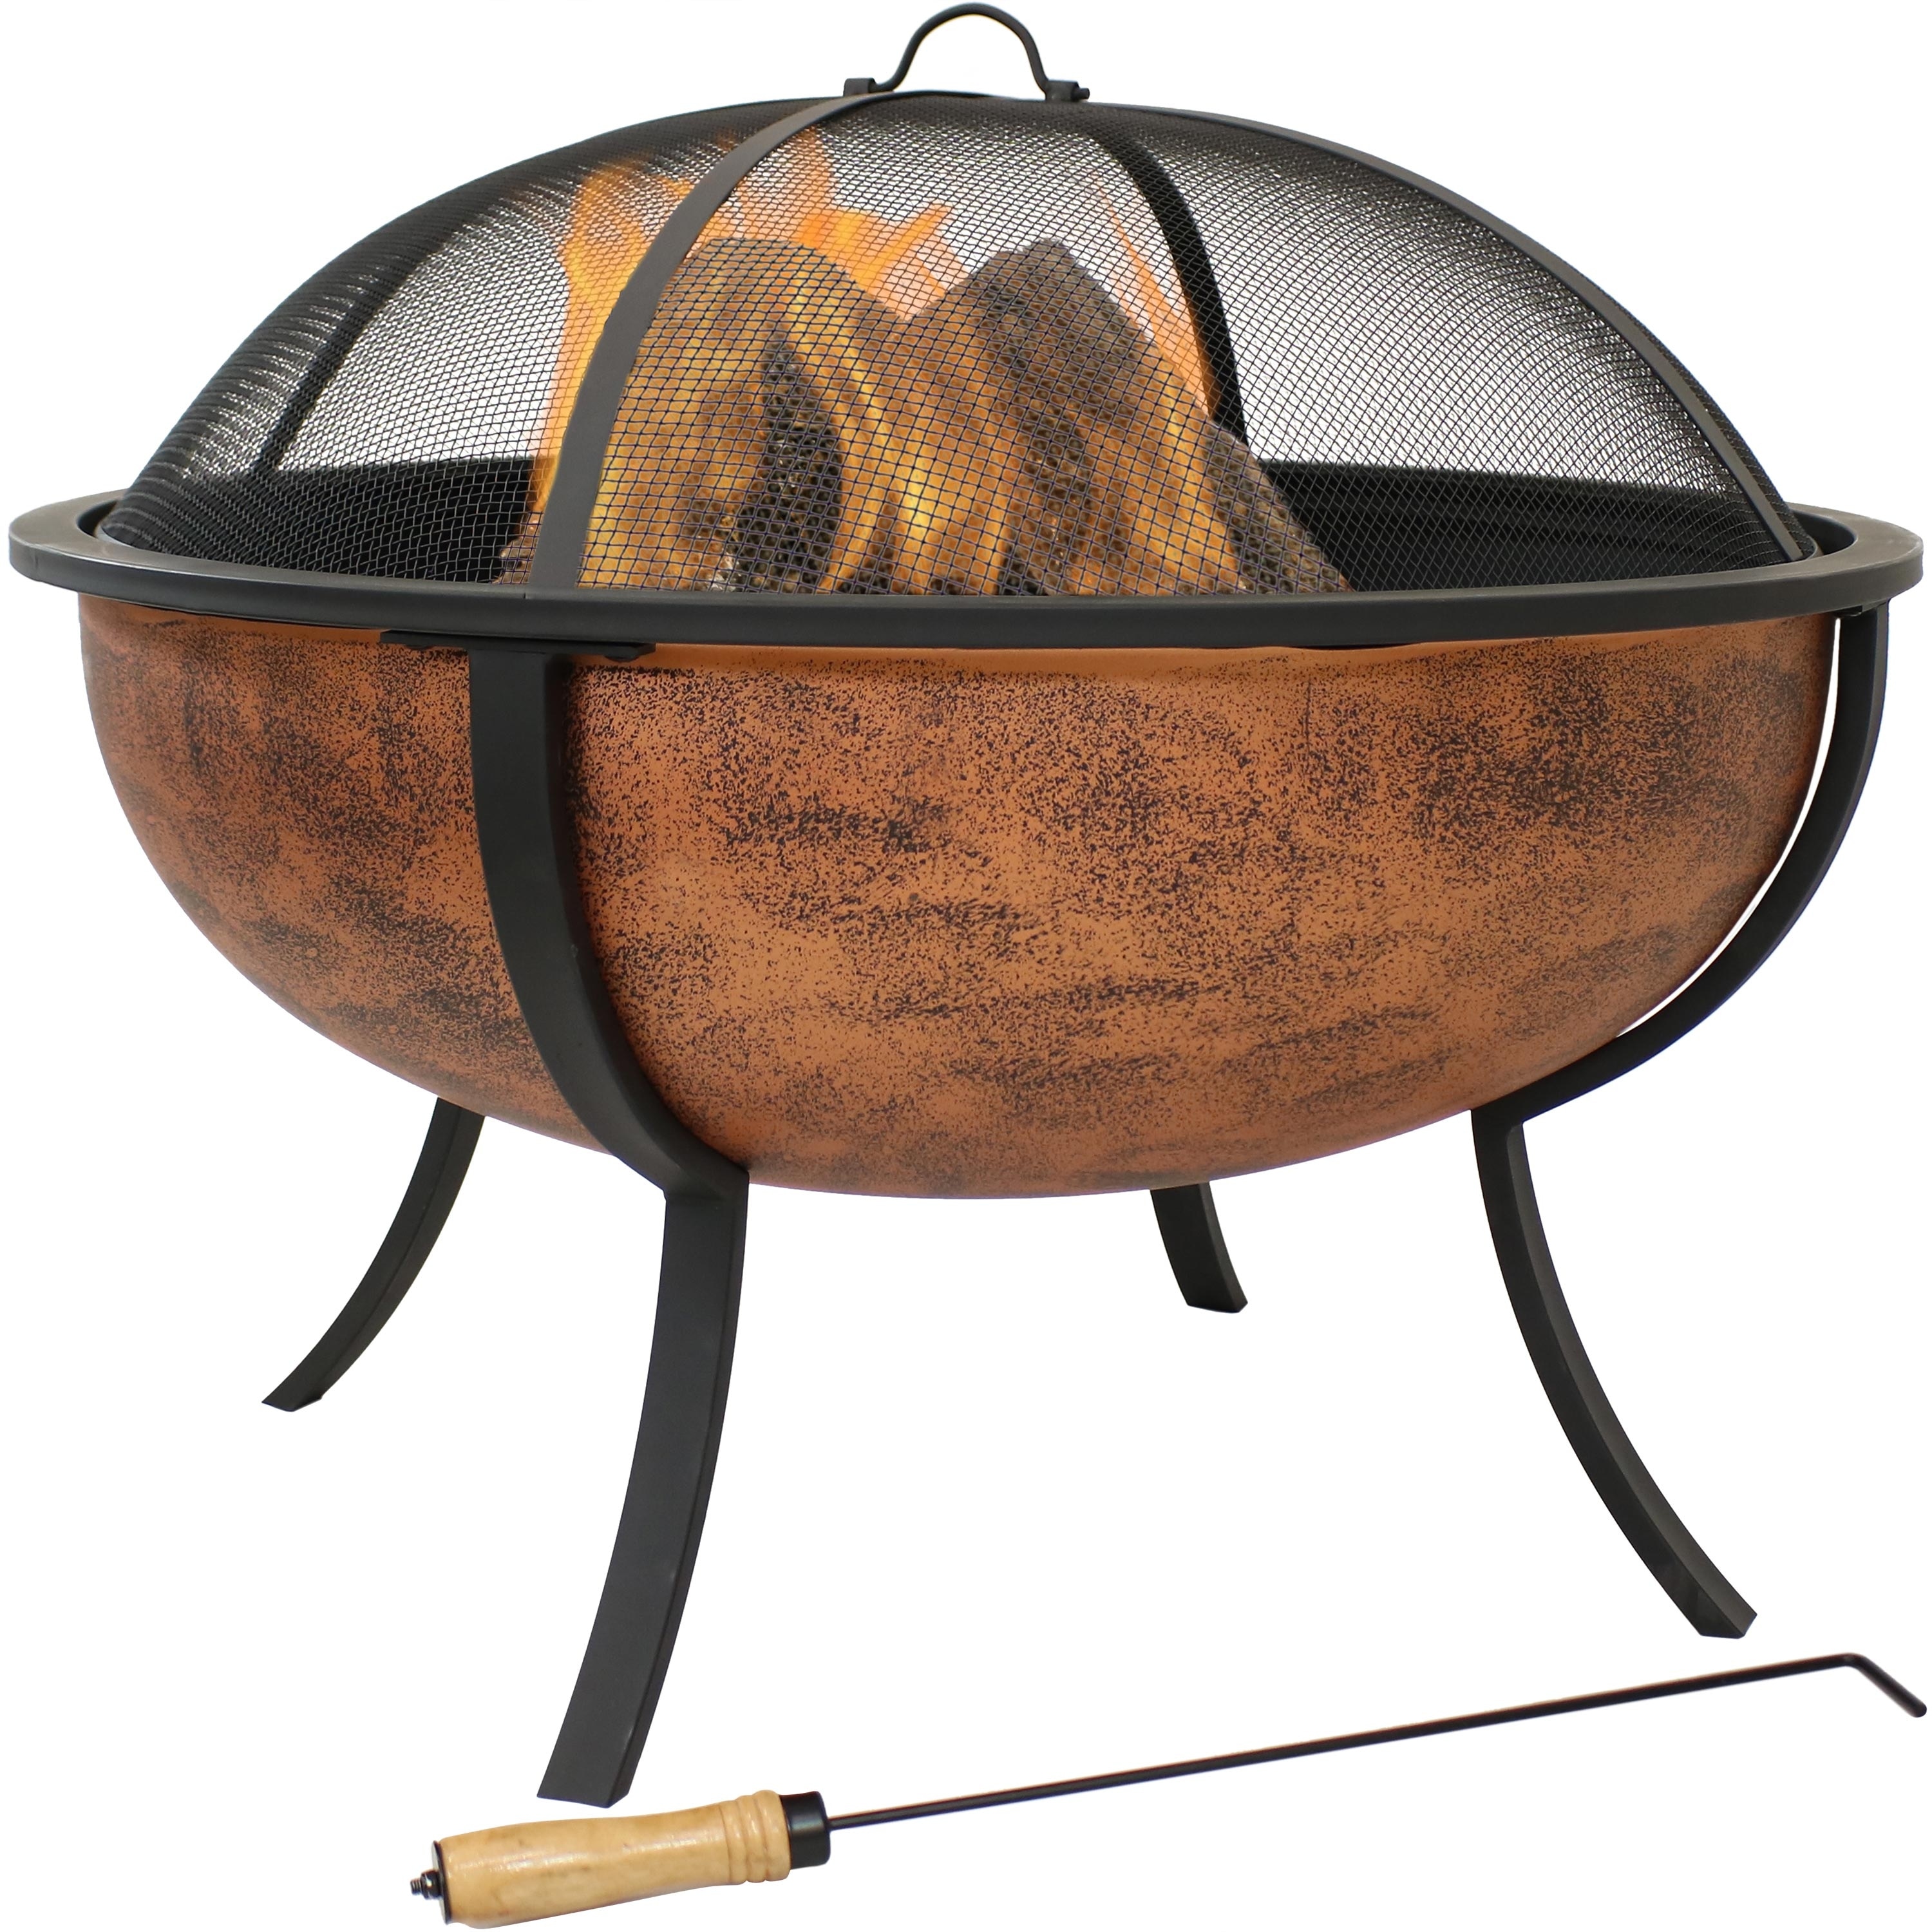 Sunnydaze Decor Sunnydaze Copper Finish Raised Outdoor Fire Pit Bowl with Spark Screen - 32-Inch